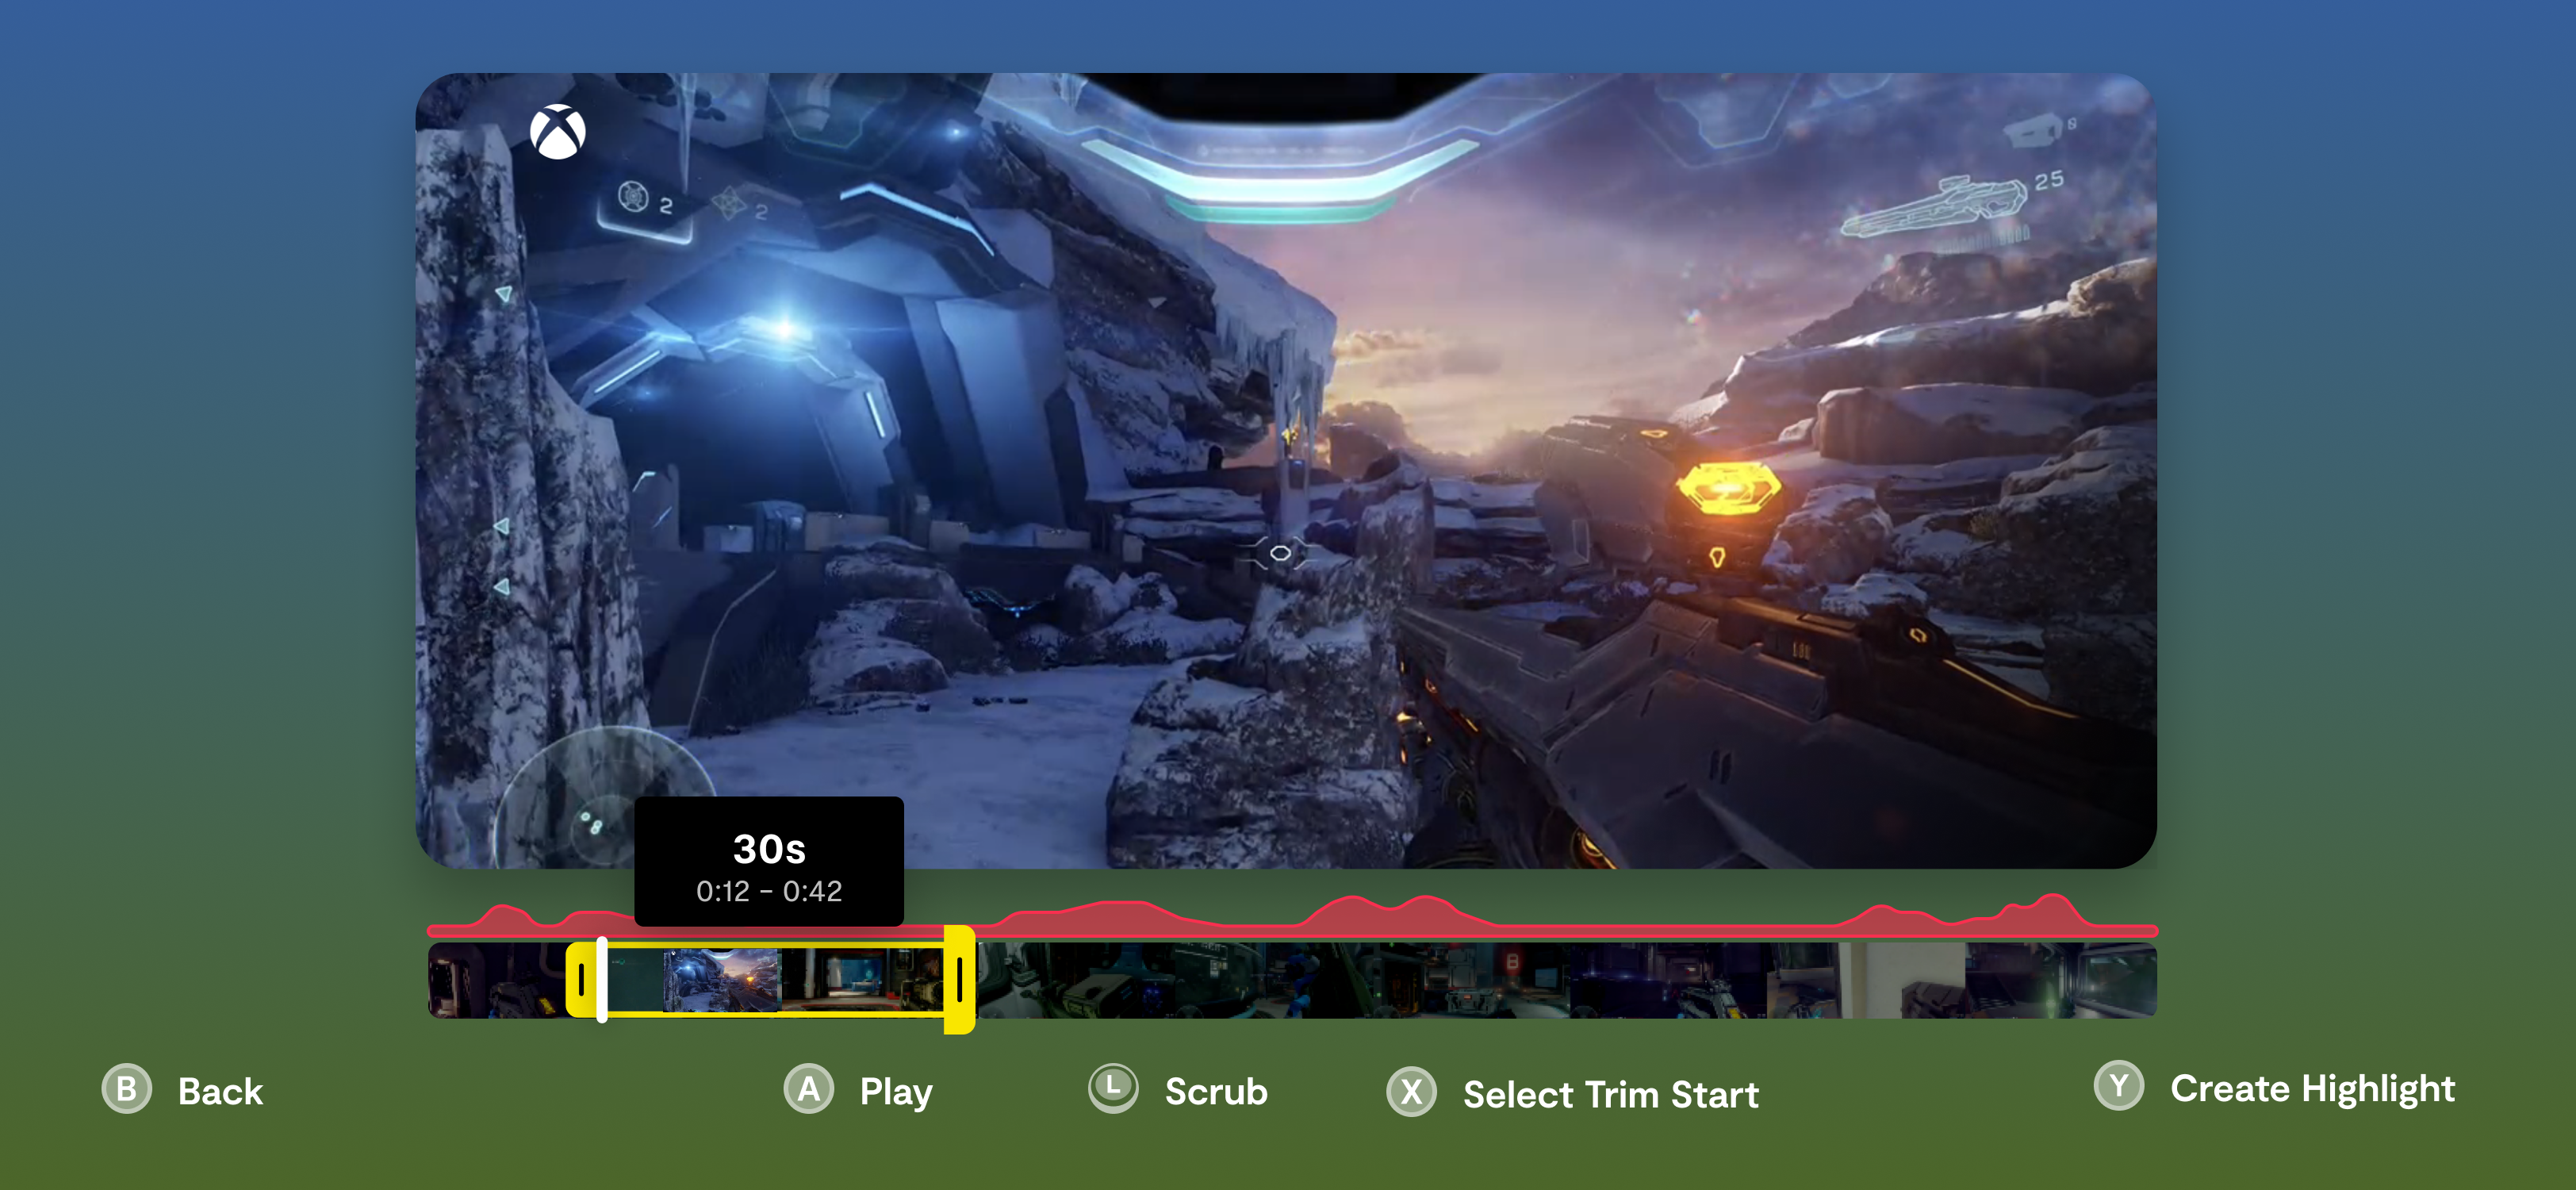 Fortnite returns to iOS through Xbox Cloud Gaming